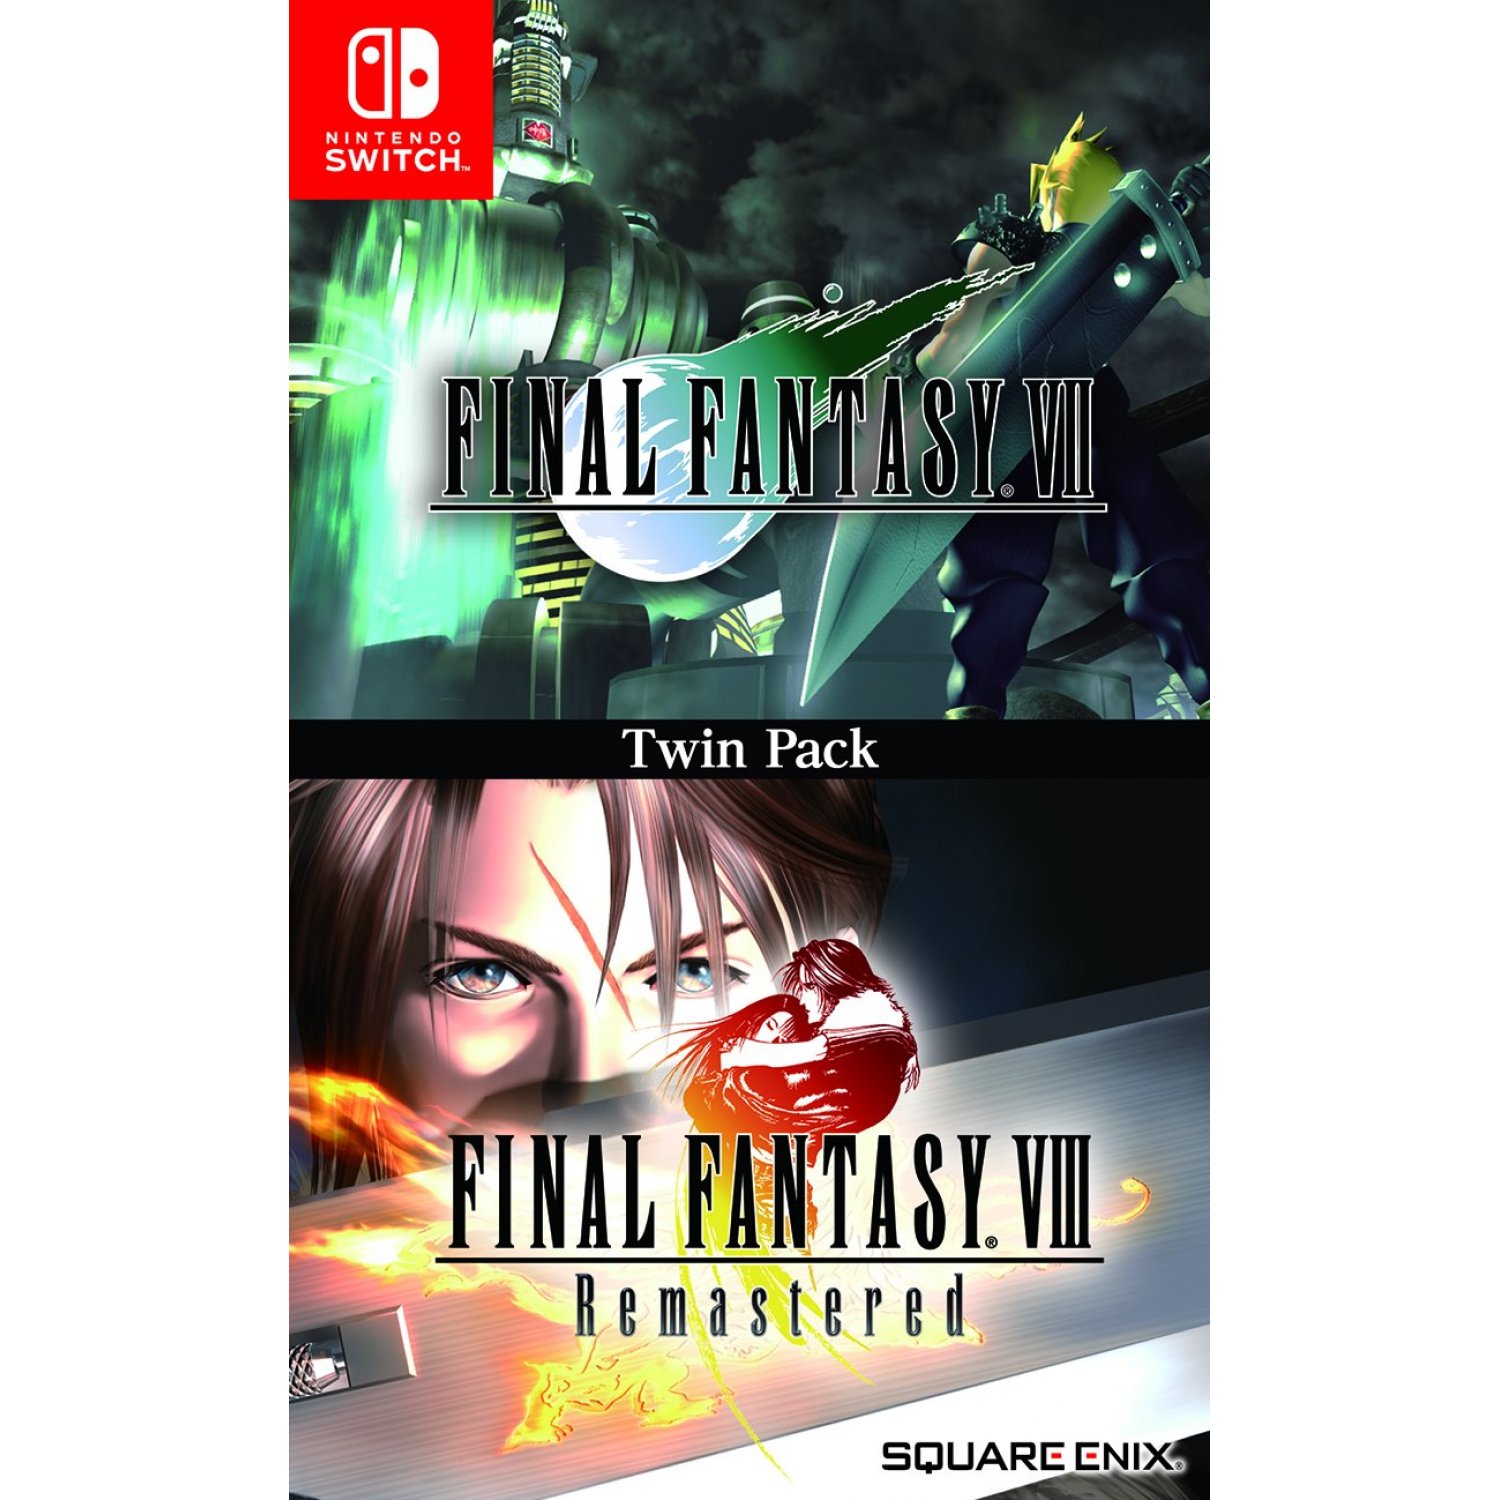 Final Fantasy VII + Final Fantasy VIII Remastered Twin Pack (angol felirattal) - Nintendo Switch Játékok